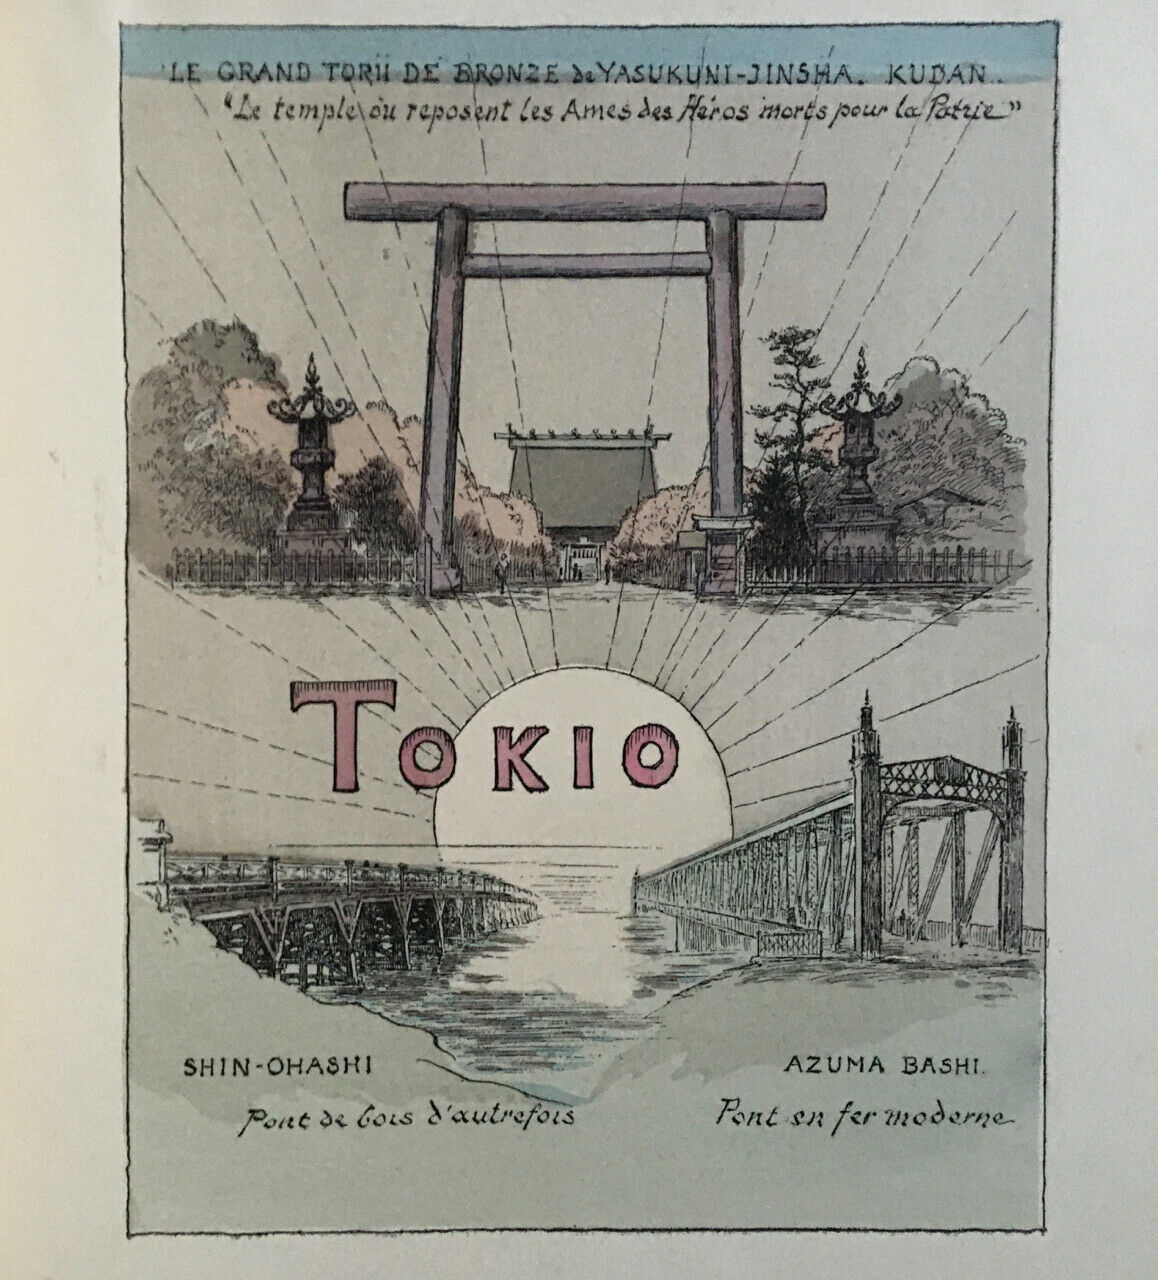 Félix Regamey — Japan — E.O. No./ 1000 — 10 pl. color — Paul Paclot — [1903].